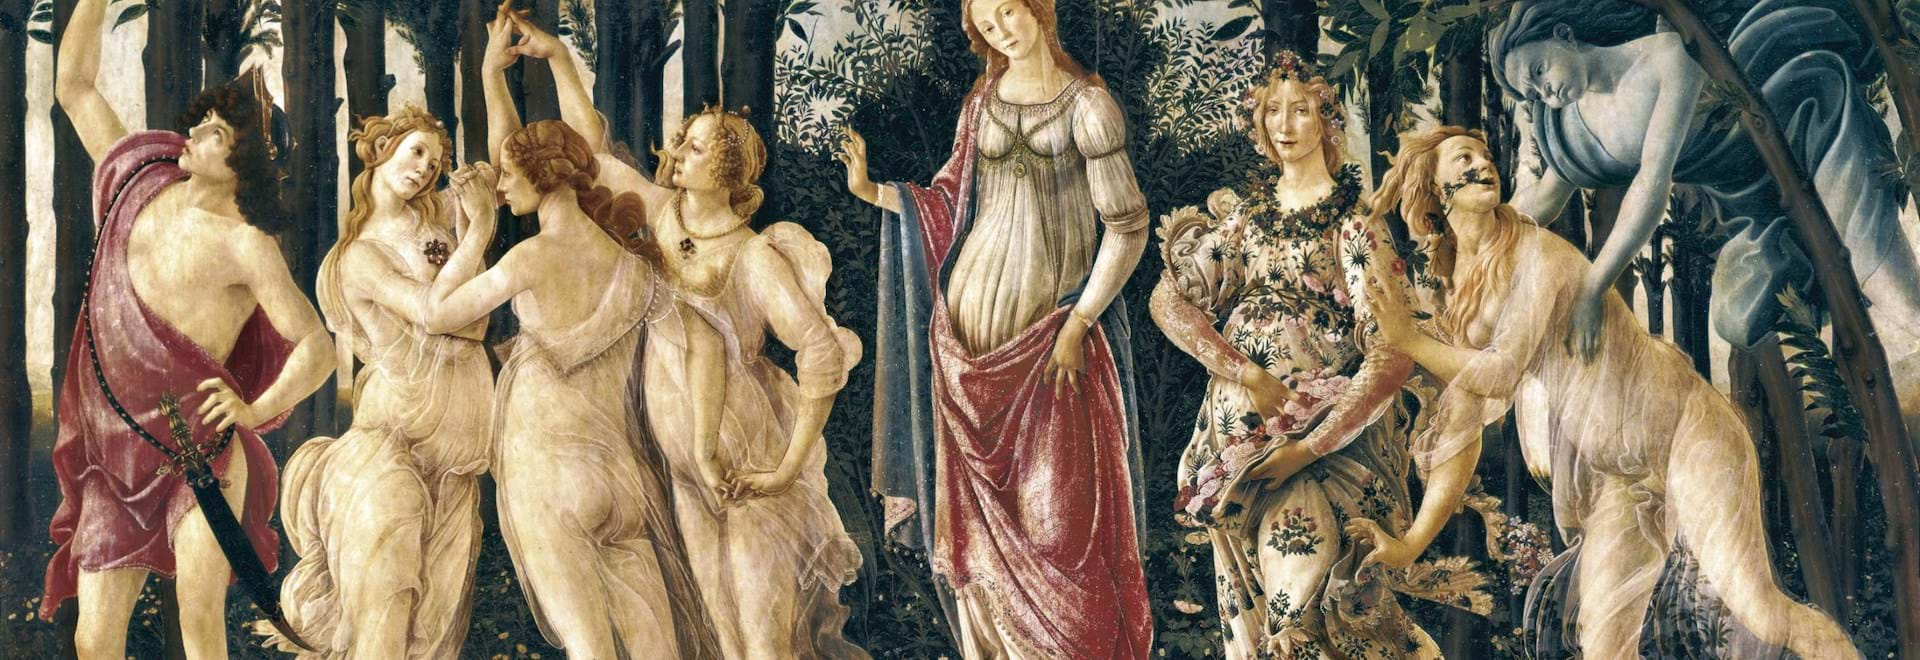 The Spring Botticelli